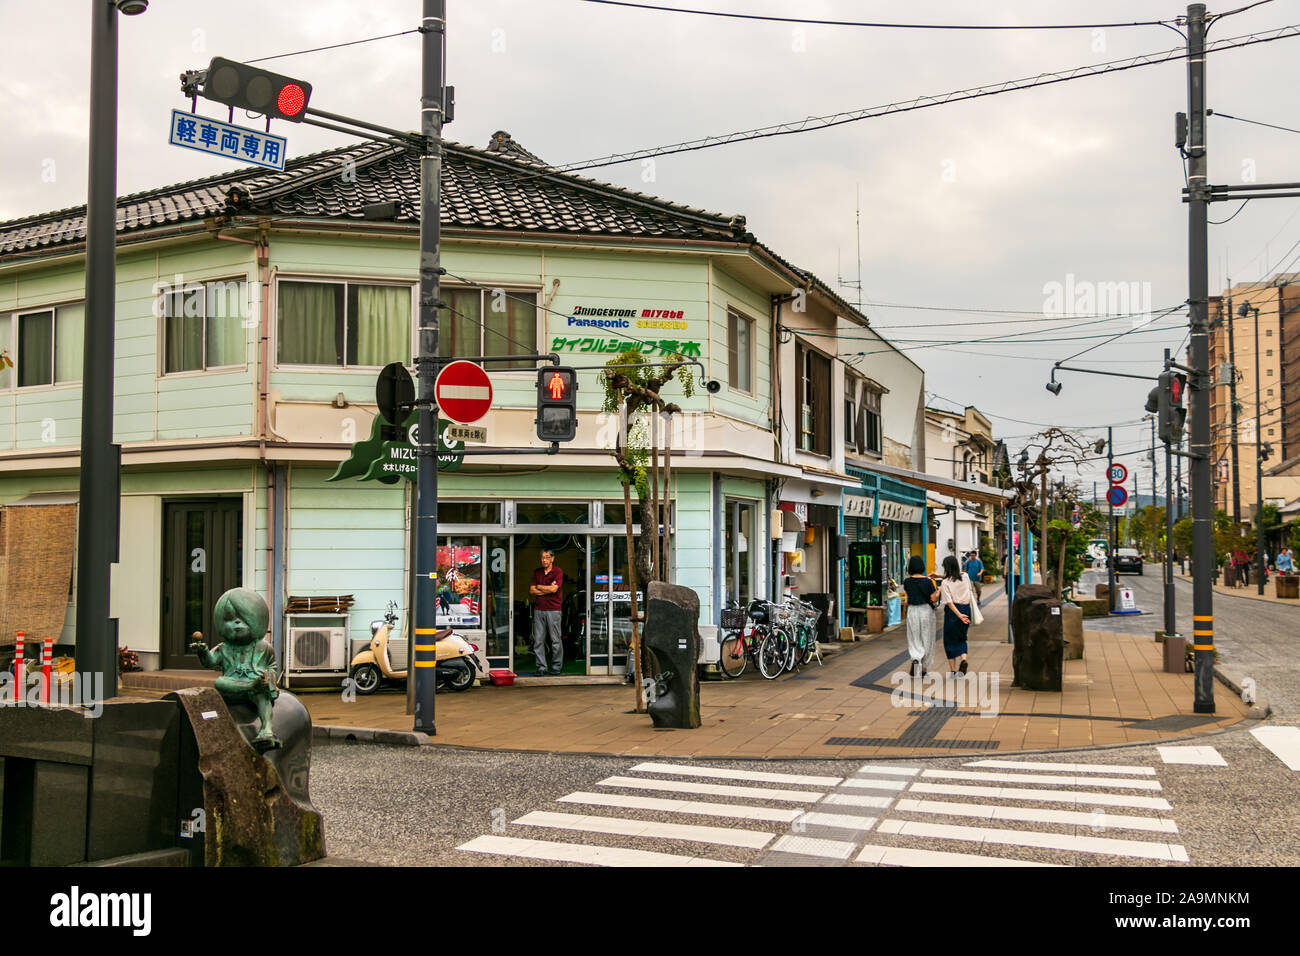 Corner of the Mizuki road and their manga anime statues in Sakaiminato, Japan. Stock Photo